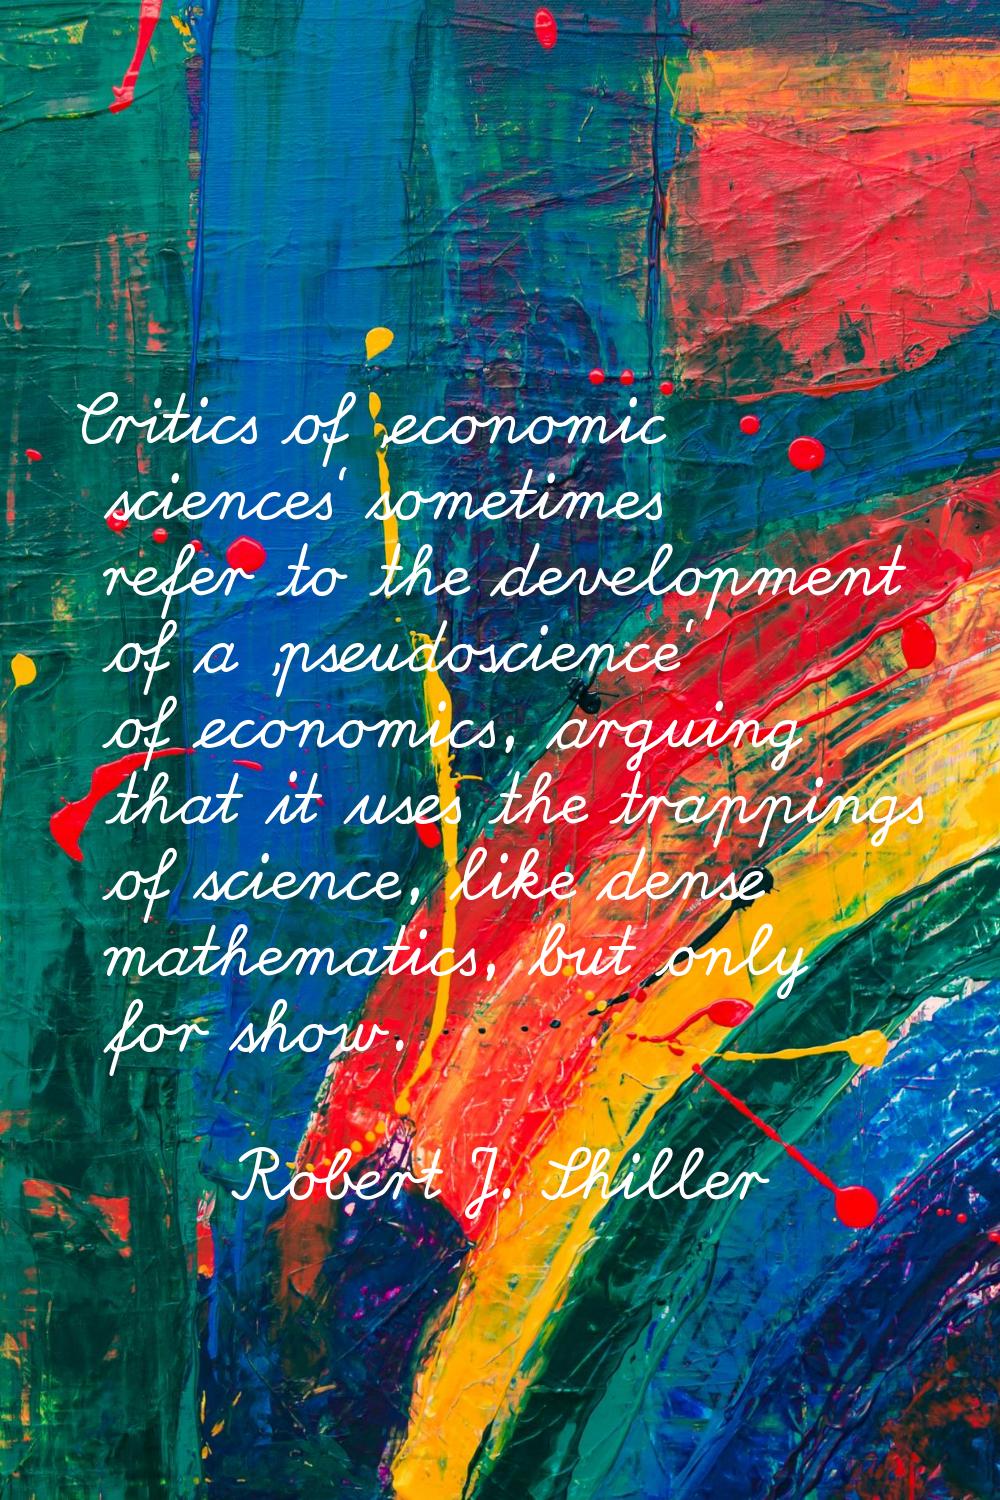 Critics of 'economic sciences' sometimes refer to the development of a 'pseudoscience' of economics